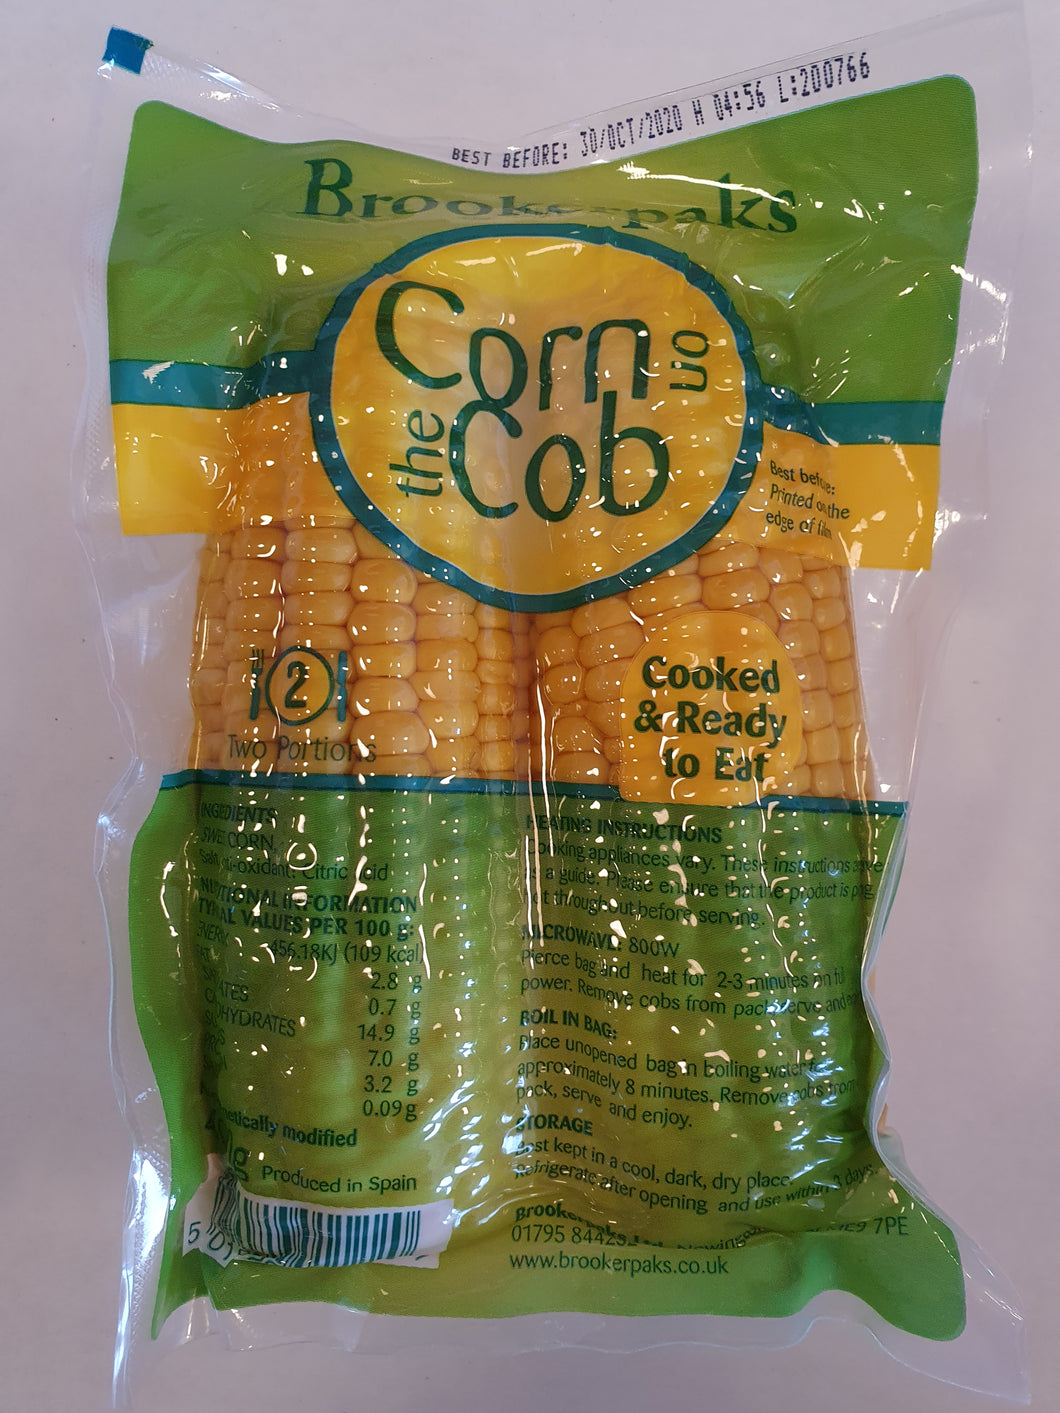 Fresh Corn On The Cob